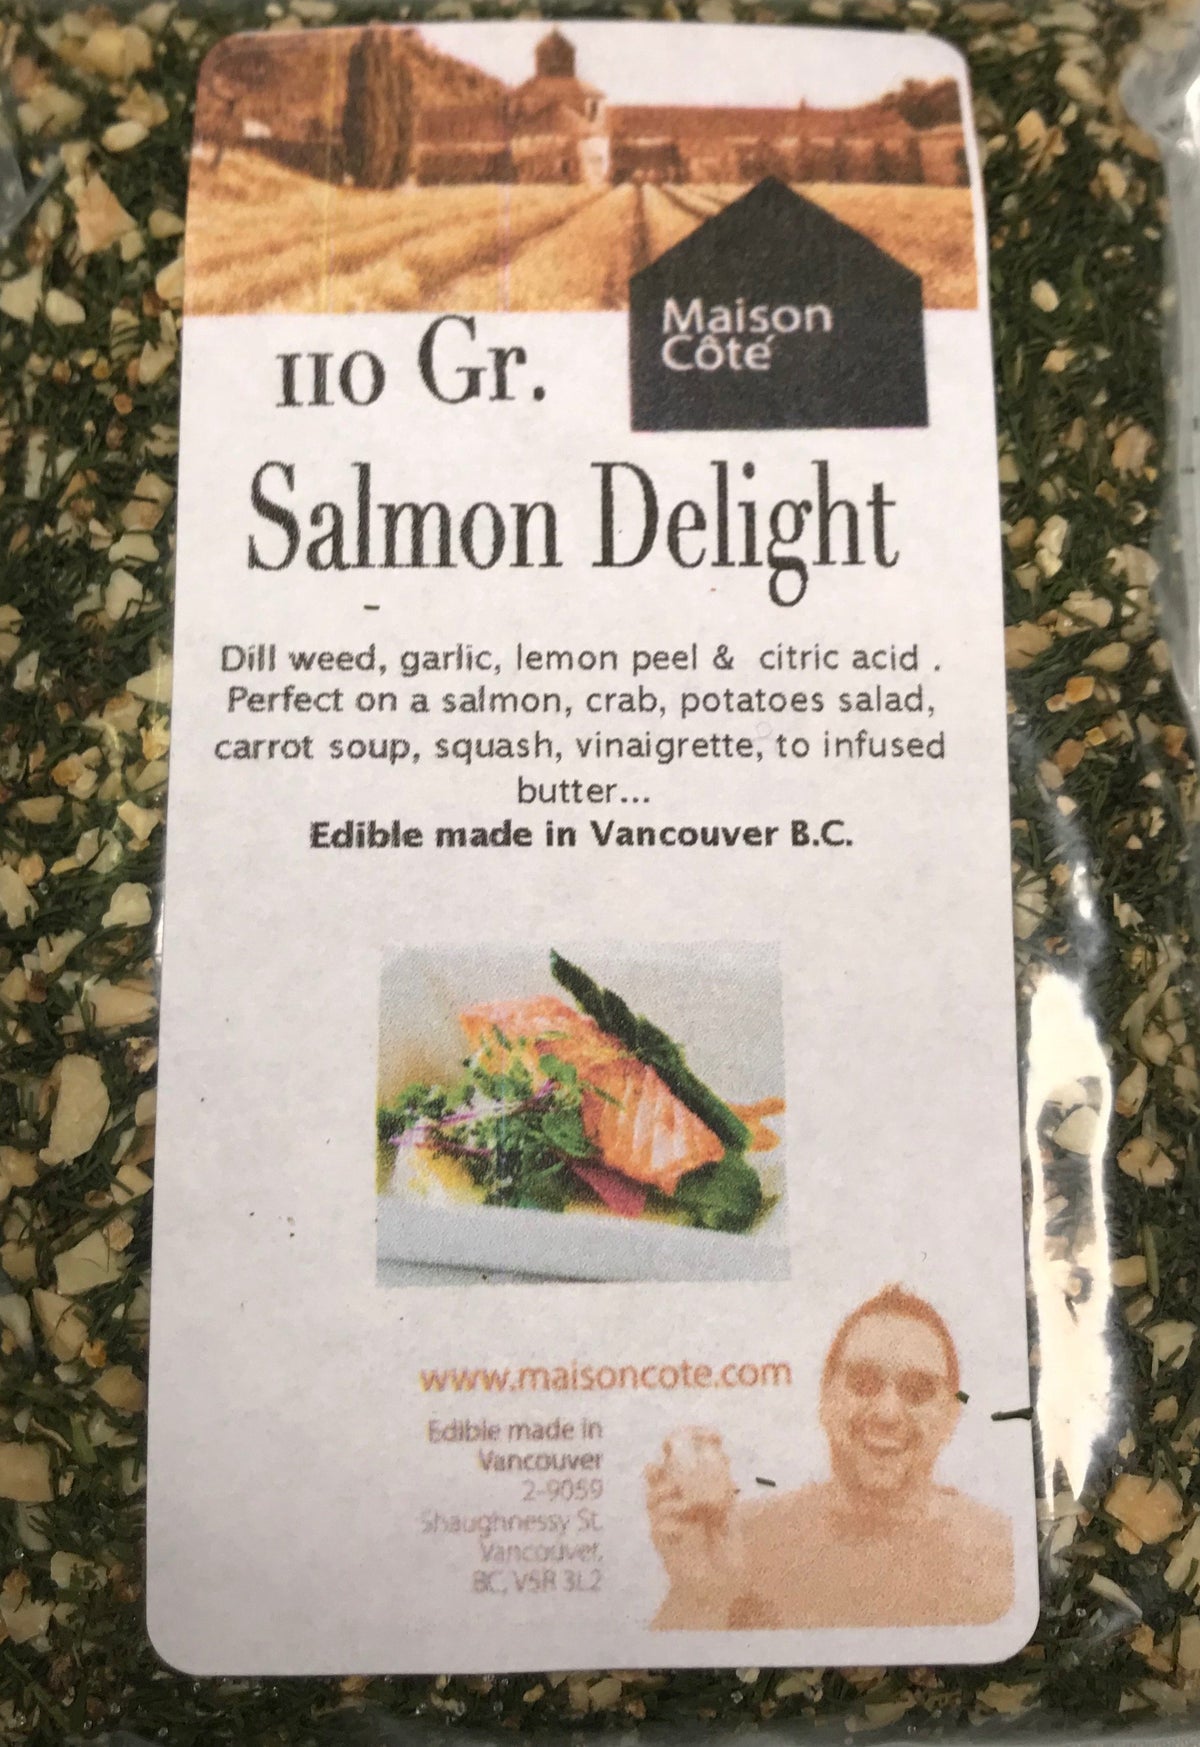 Salmon Delight